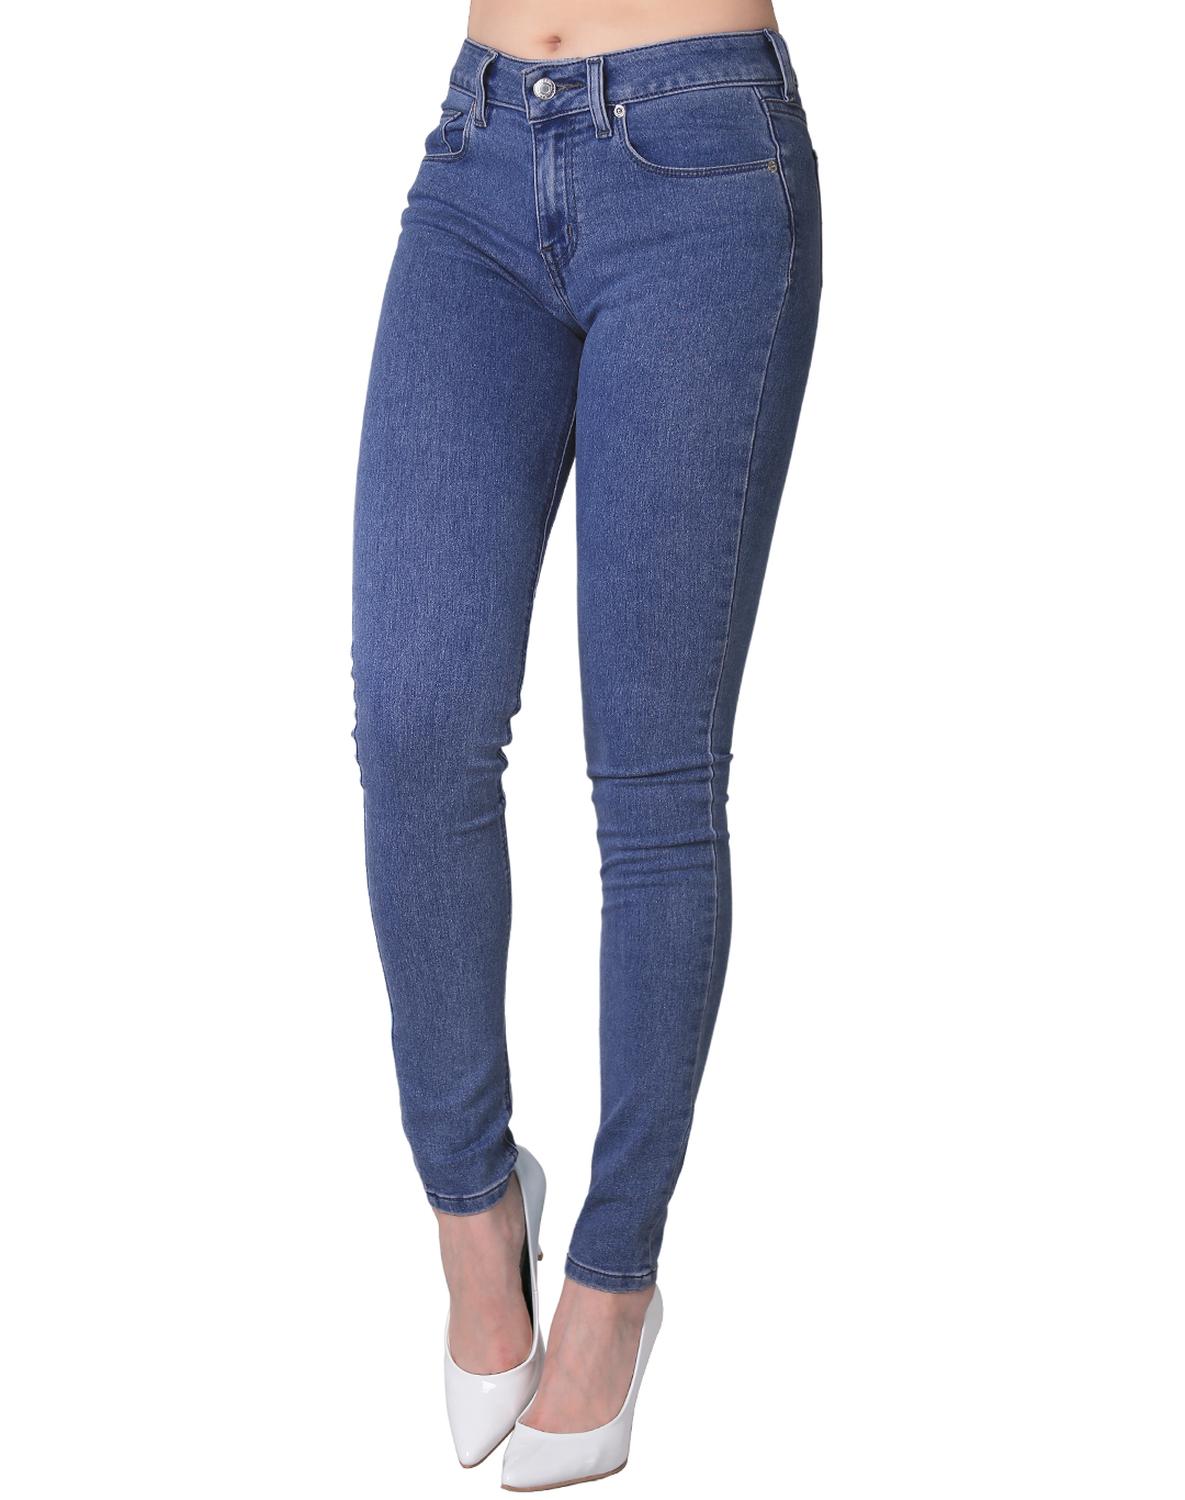 Jeans Básico Mujer Oggi Satin 59101929 Mezclilla Stretch